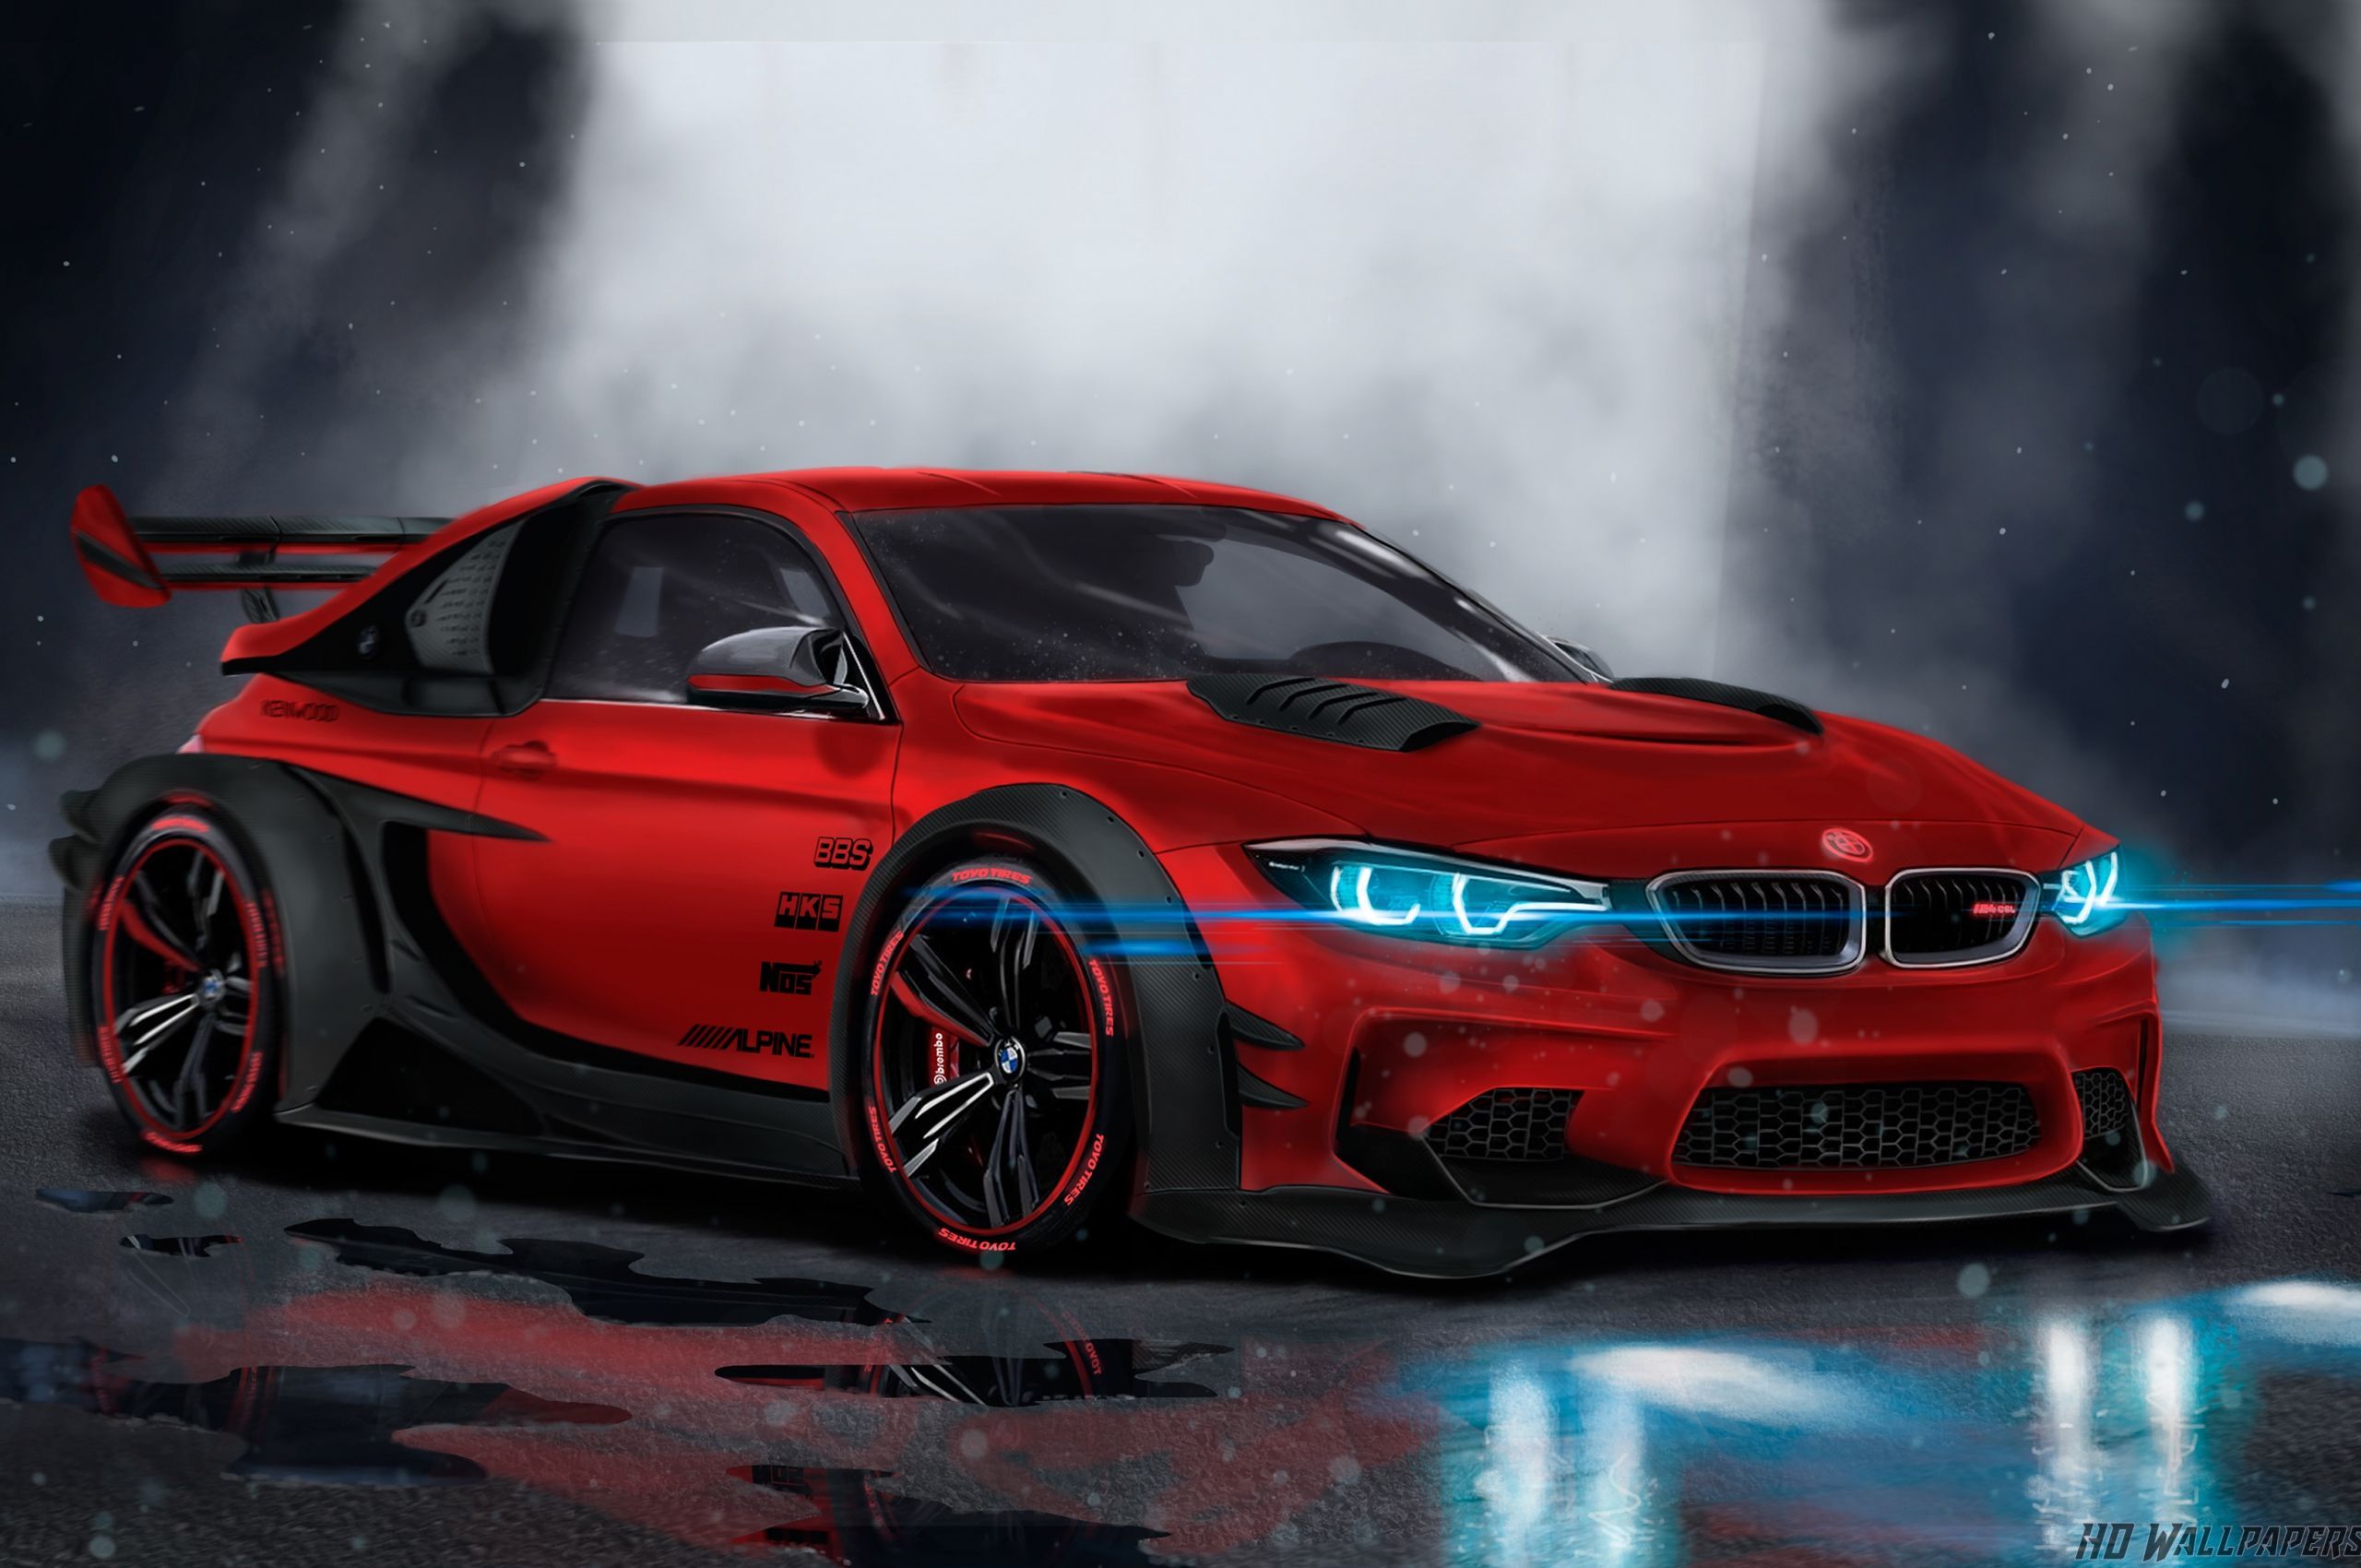 A red BMW sports car with a futuristic look - BMW